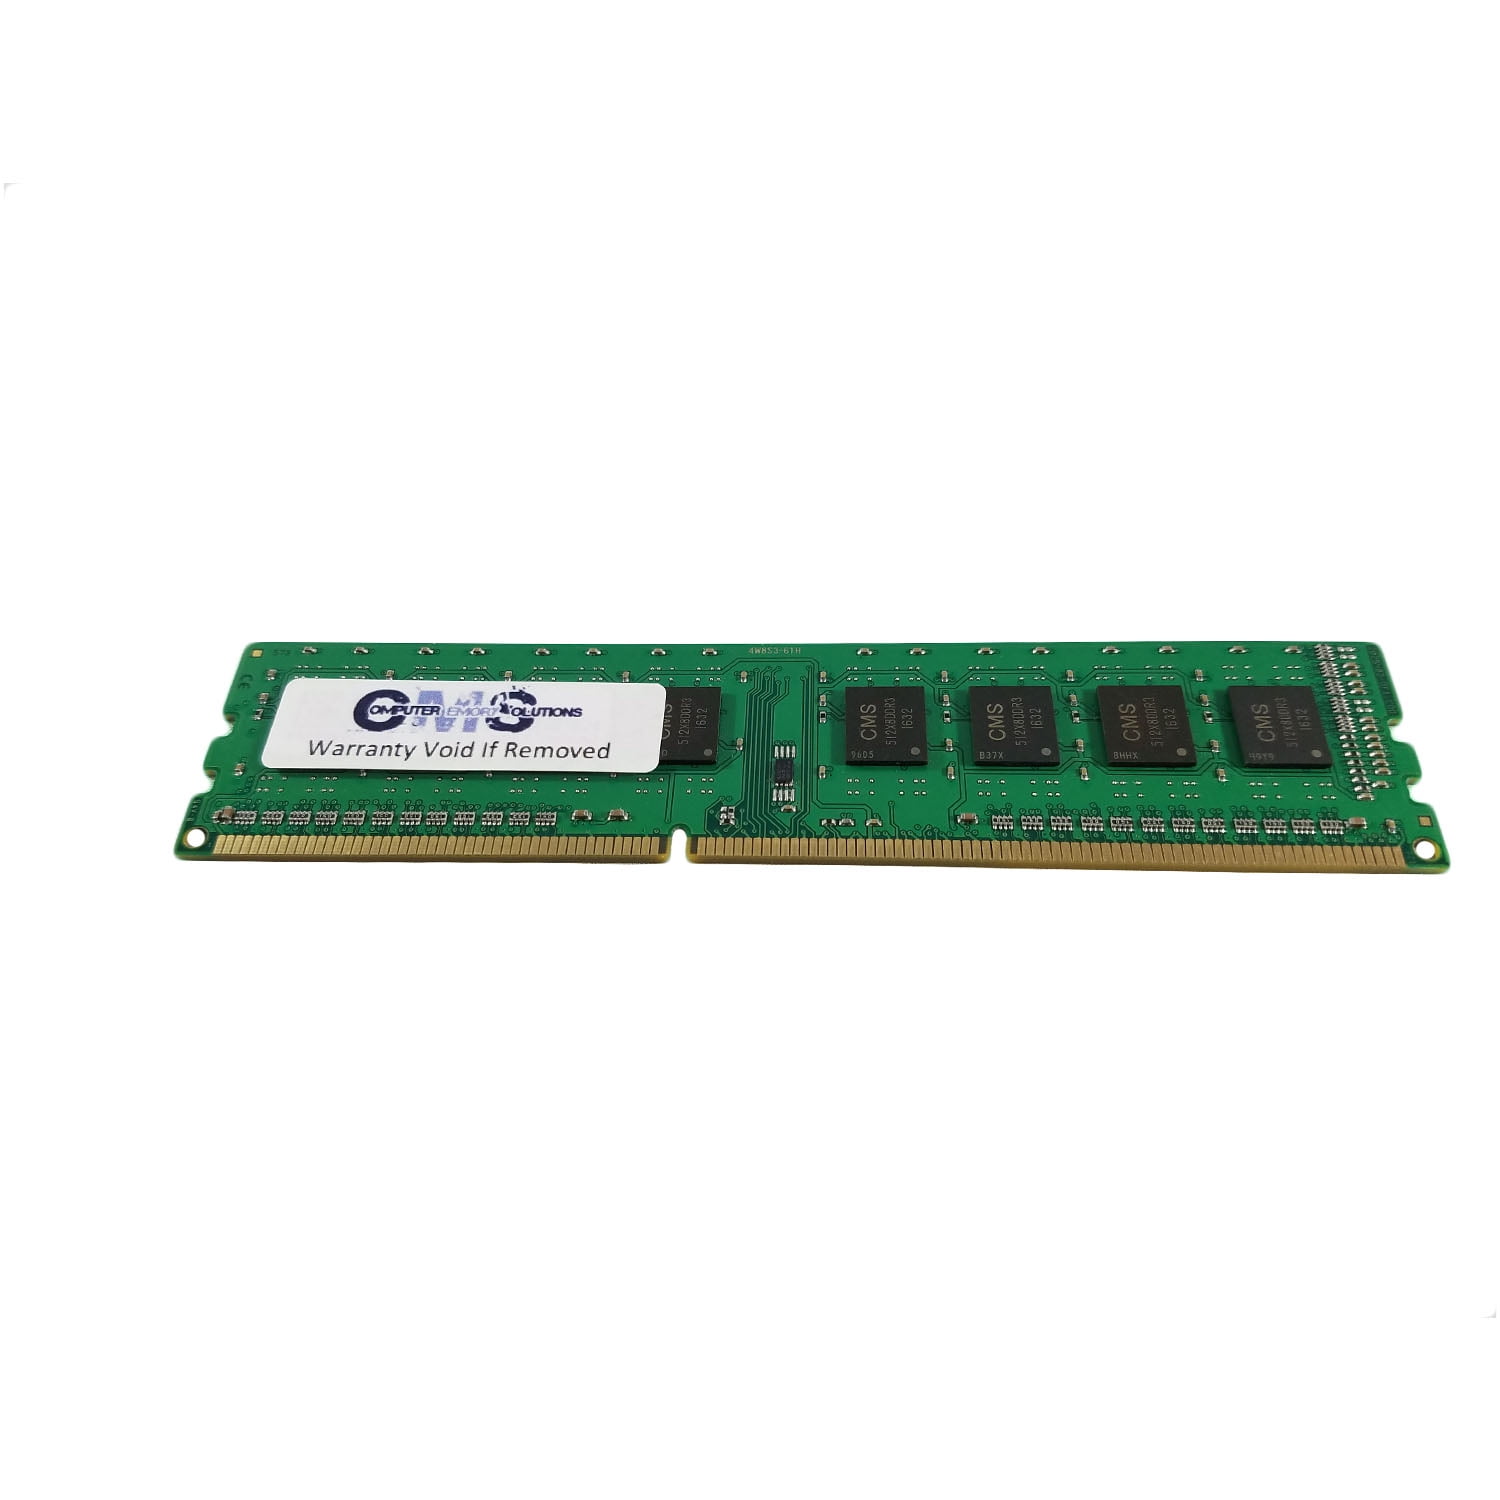 DP67BA Mainboard A69 2x4GB 8GB DH67VR DH67GD Memory RAM FOR Intel DH67CL 